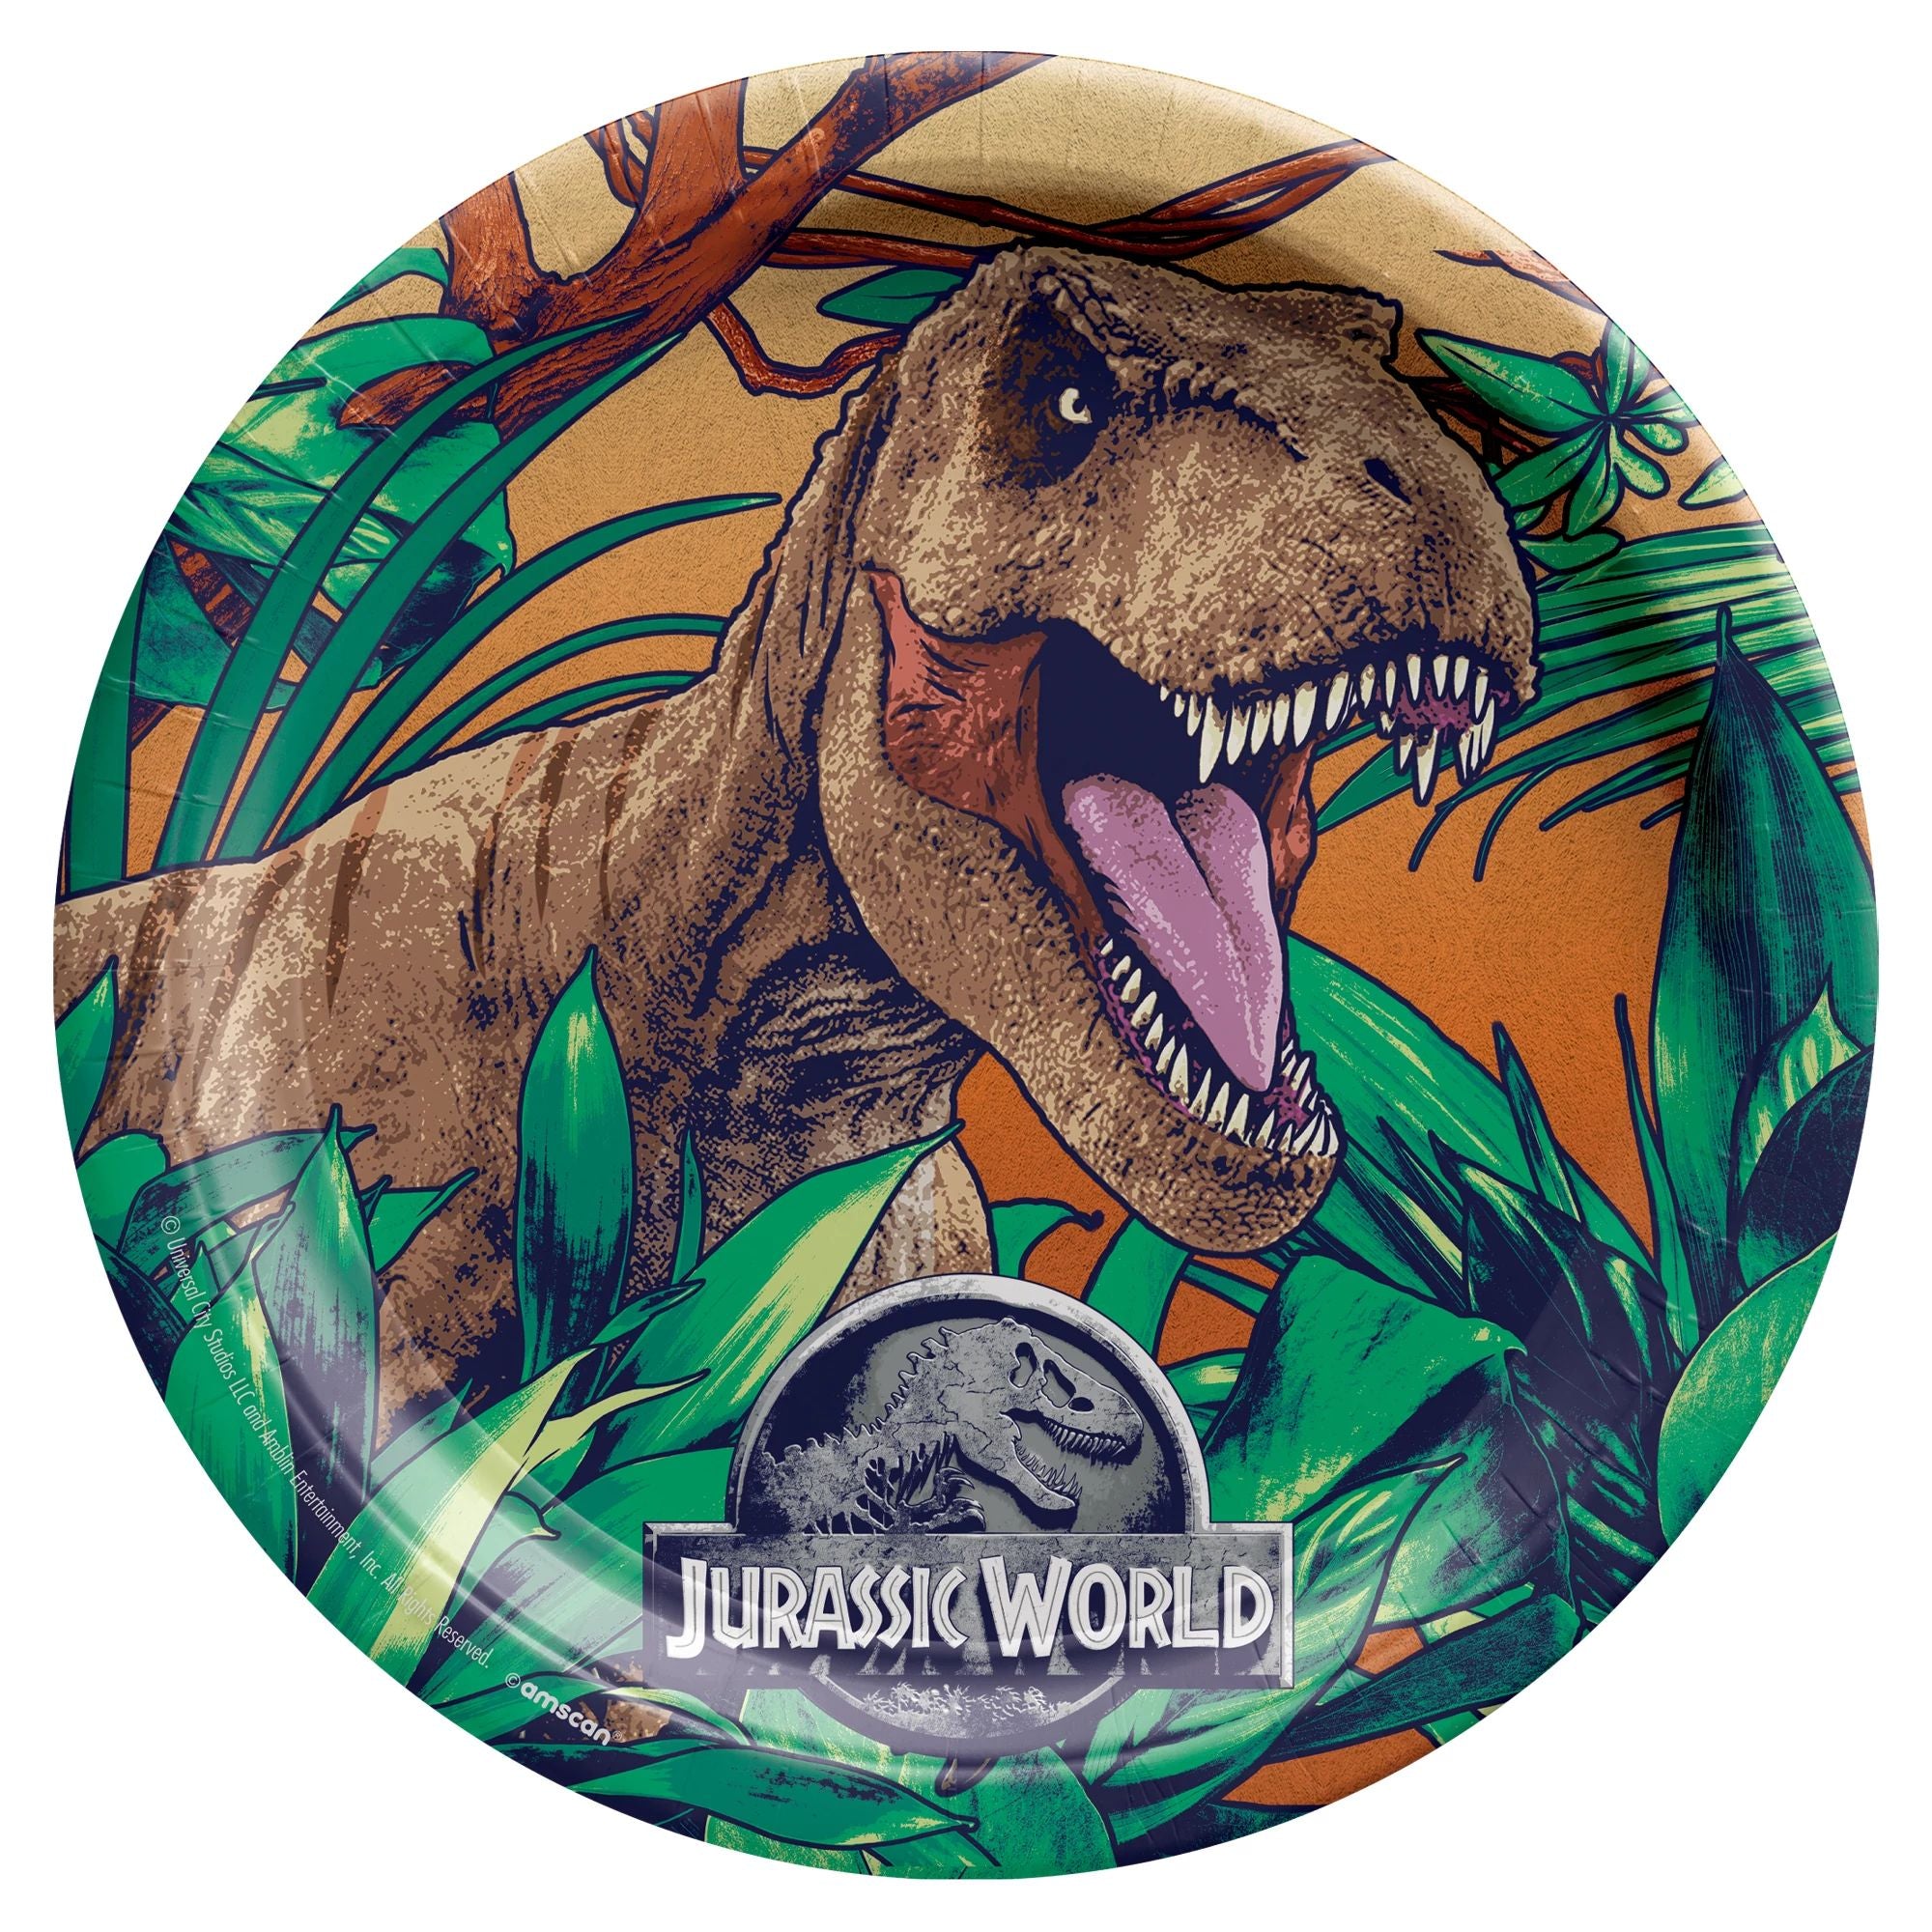 Jurassic World Into the Wild